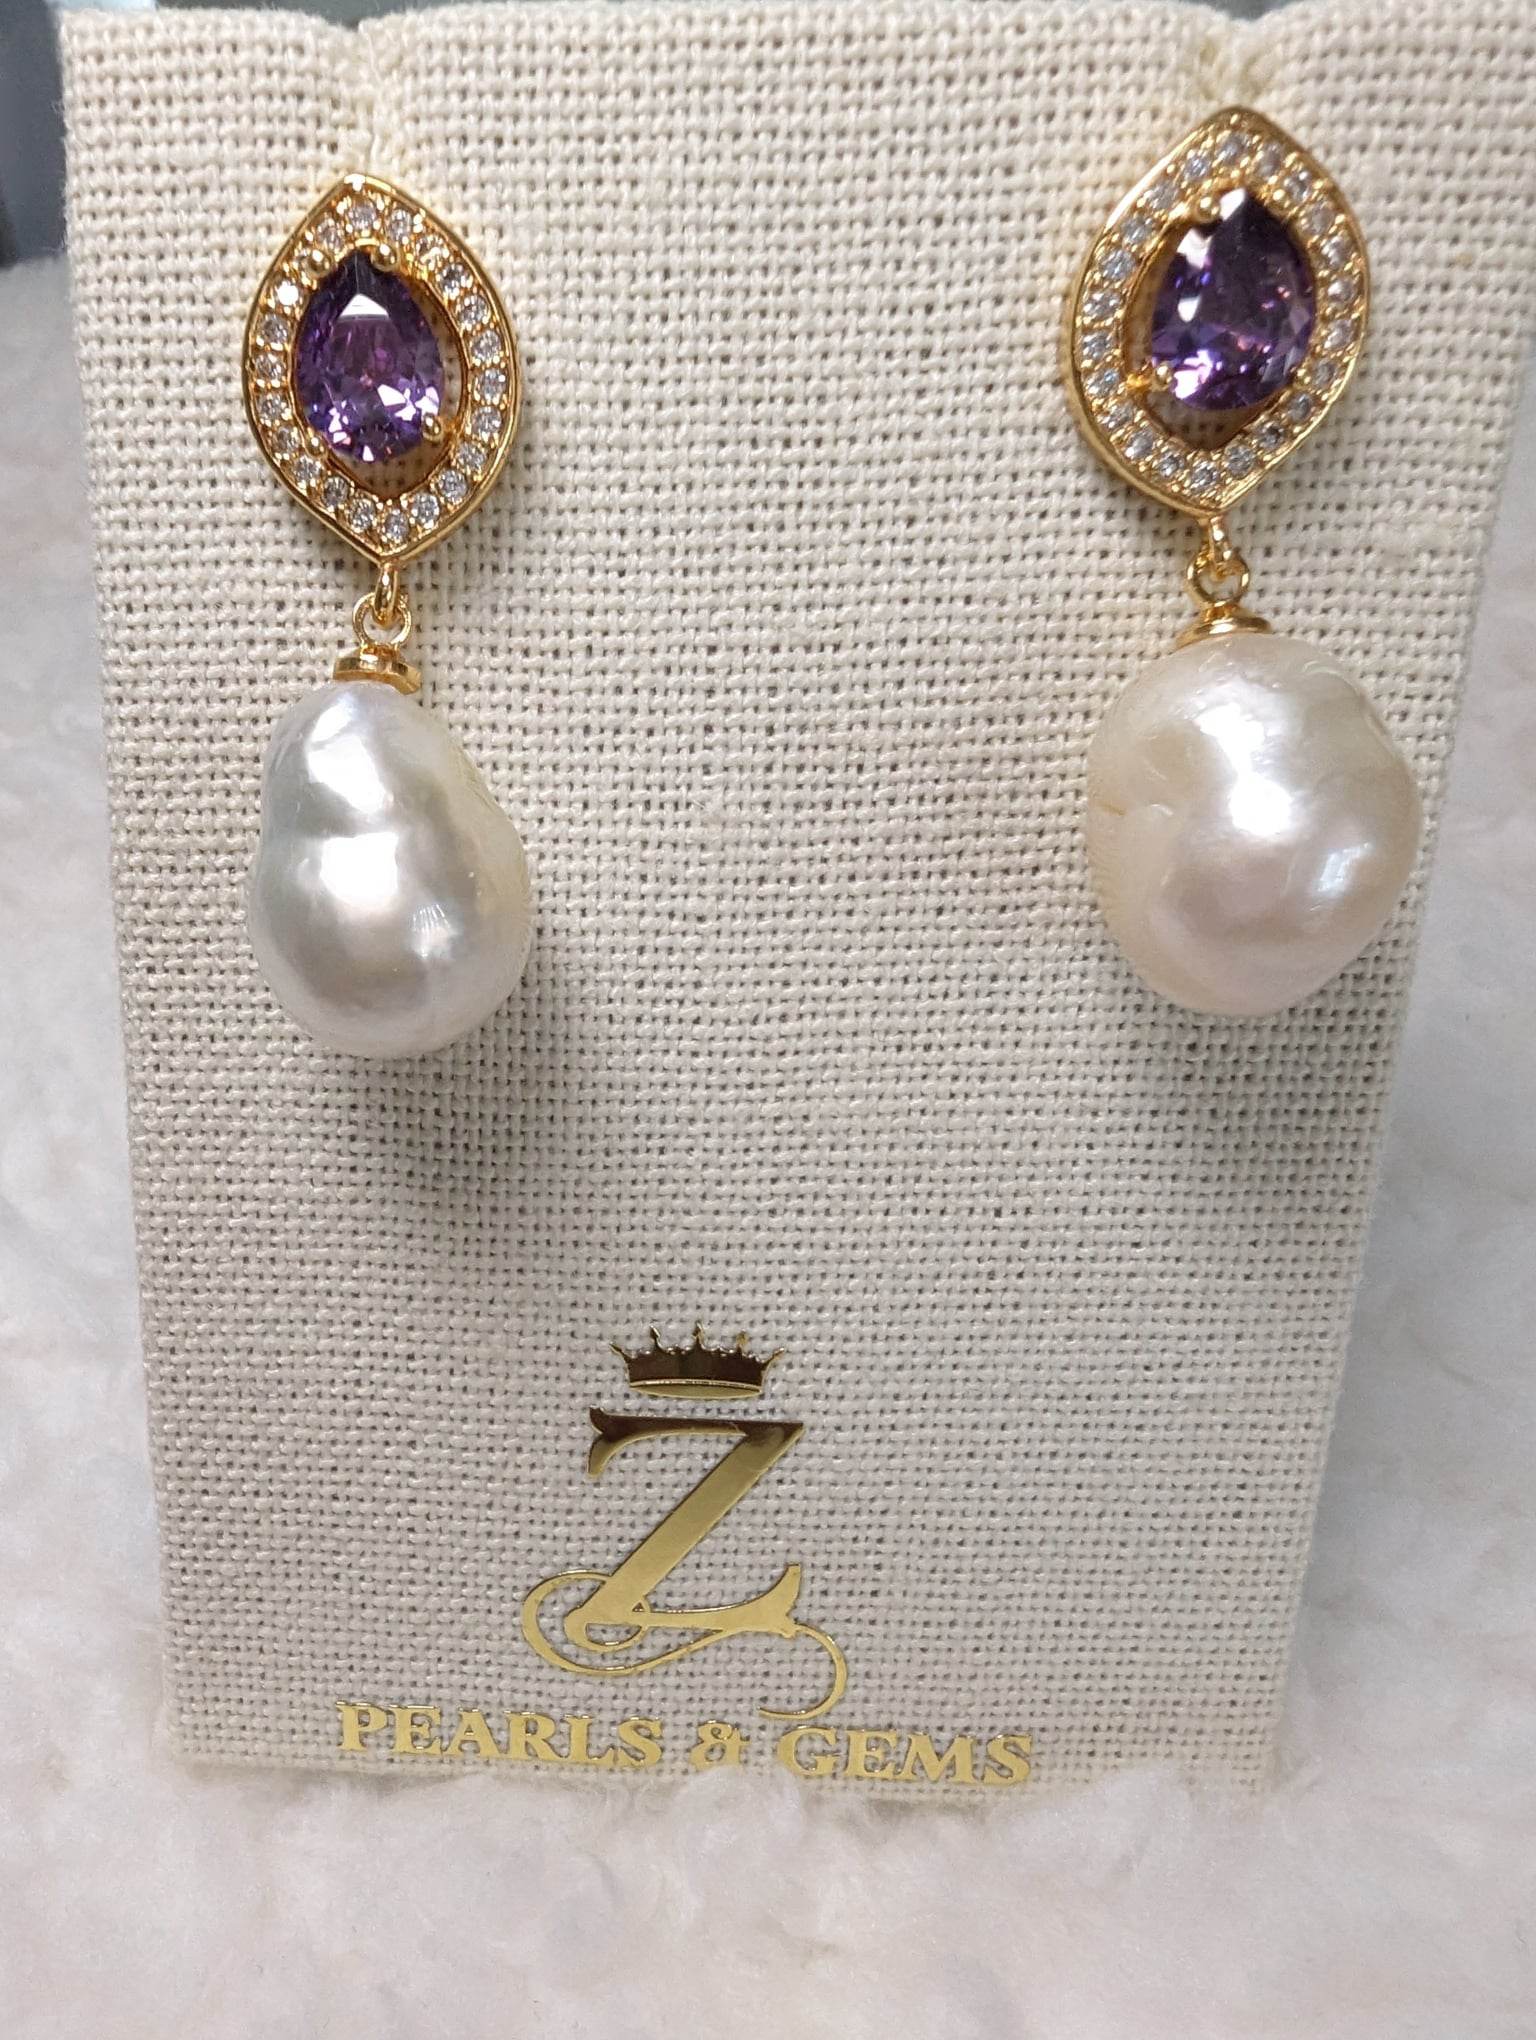 Z Pearls & Gems Flower South Sea Pearl Brooch/Pendant